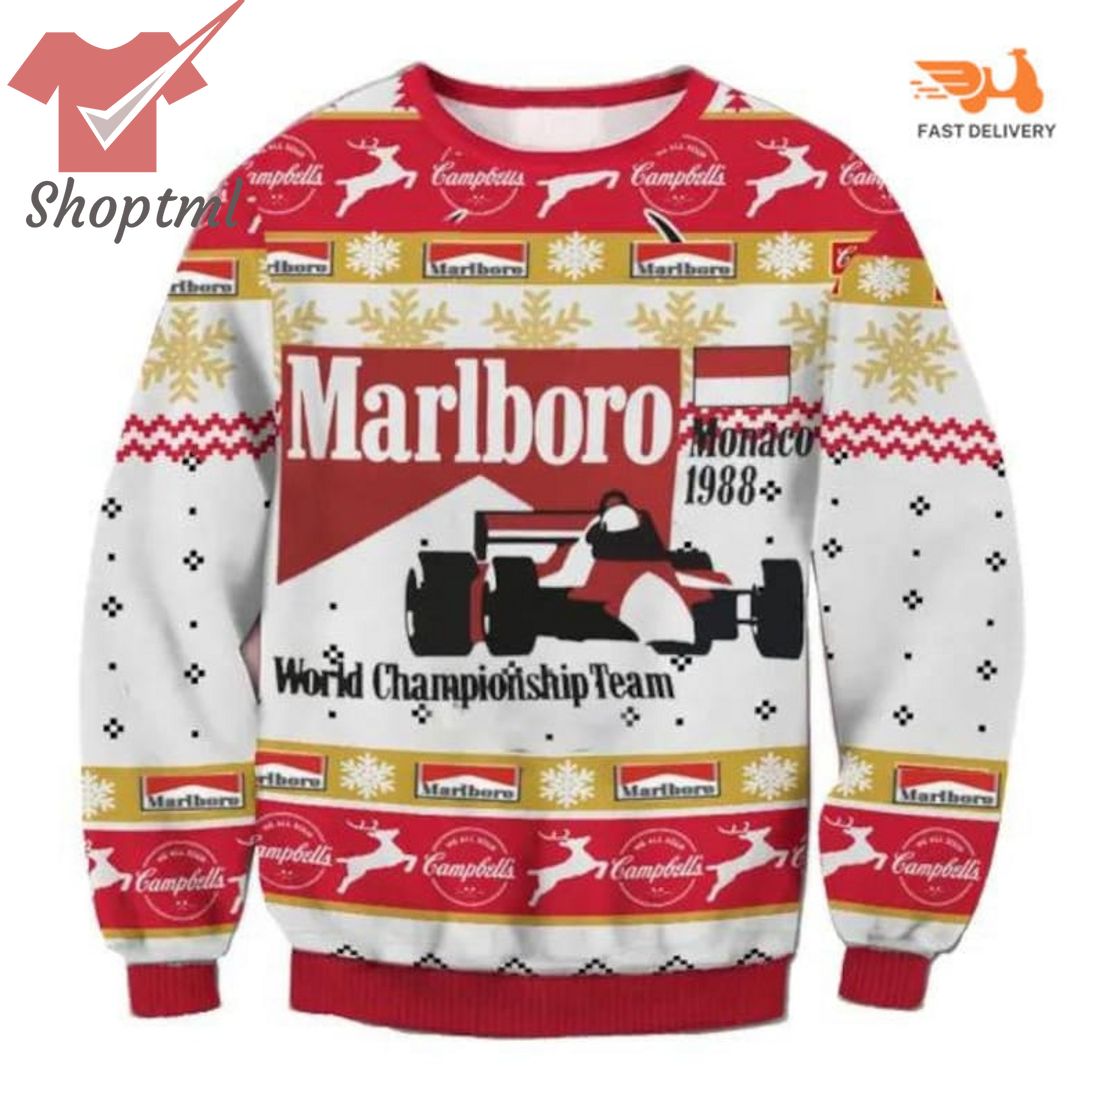 Marolboro Racing Monaco 1988 World Championship Team Ugly Sweater